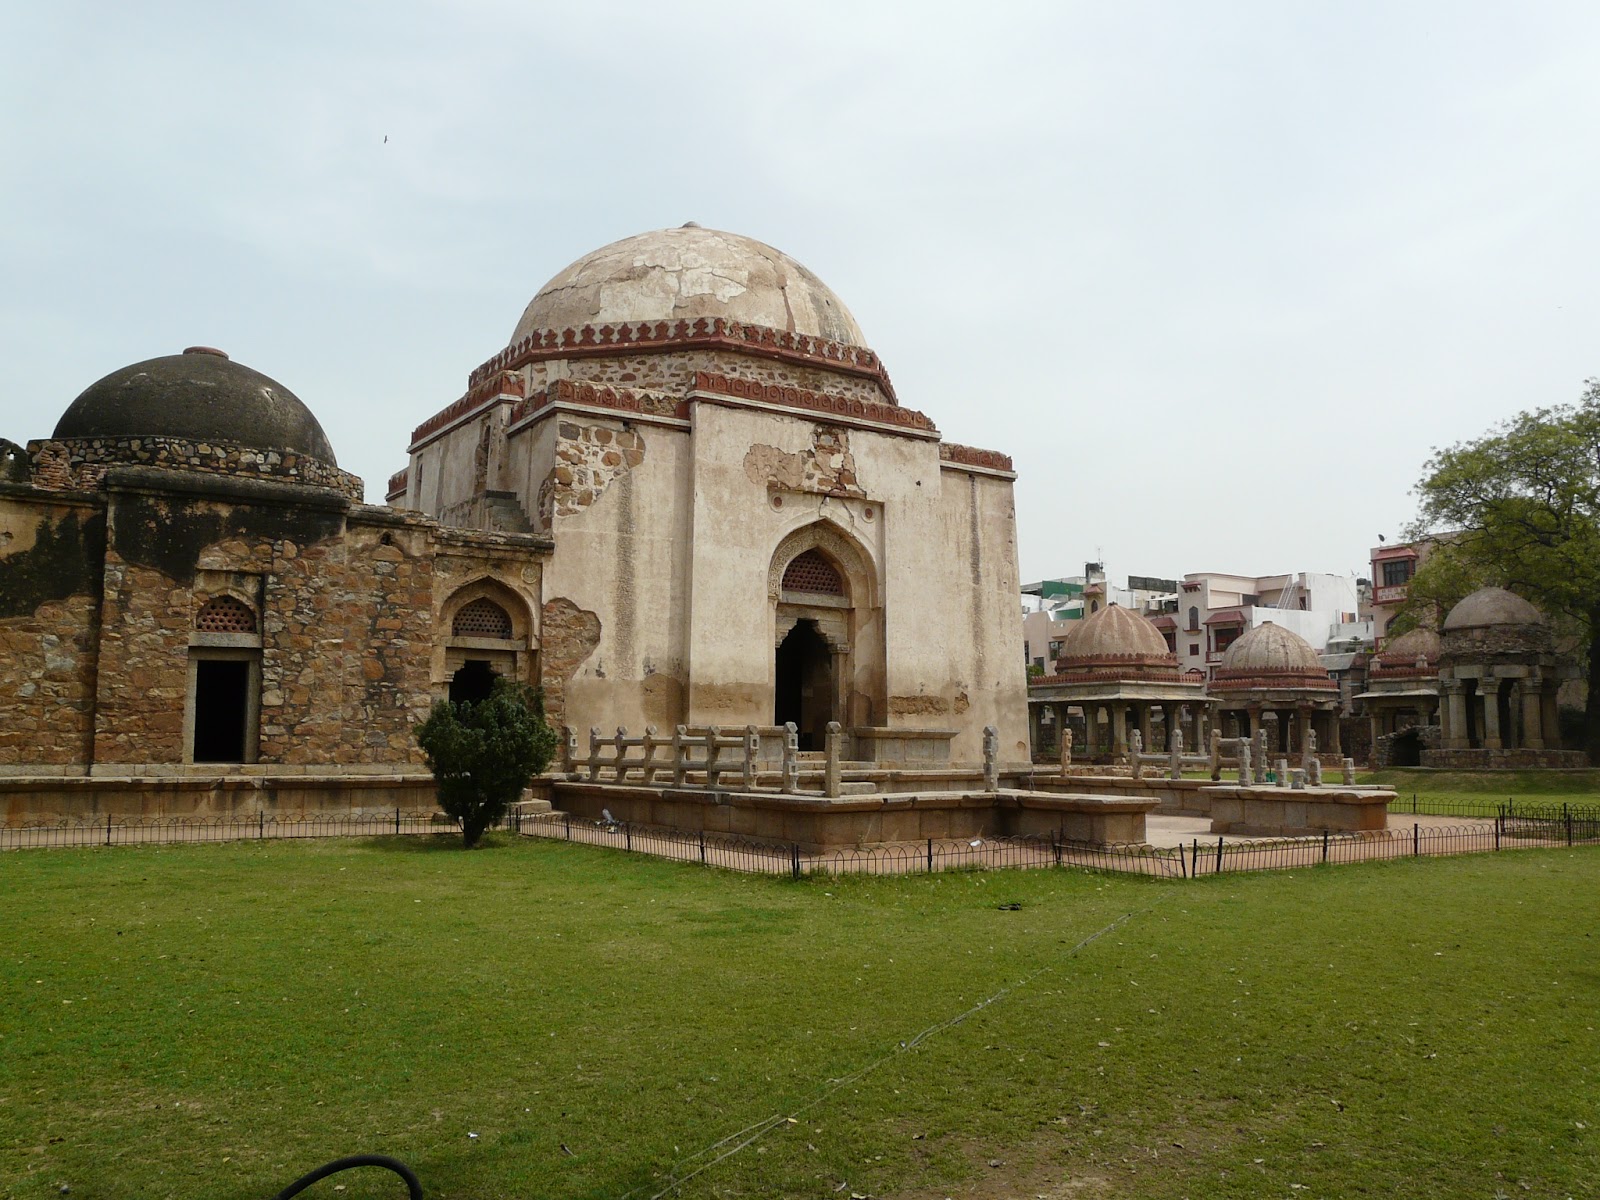 the tomb of Firuz Shah Tughlaq.